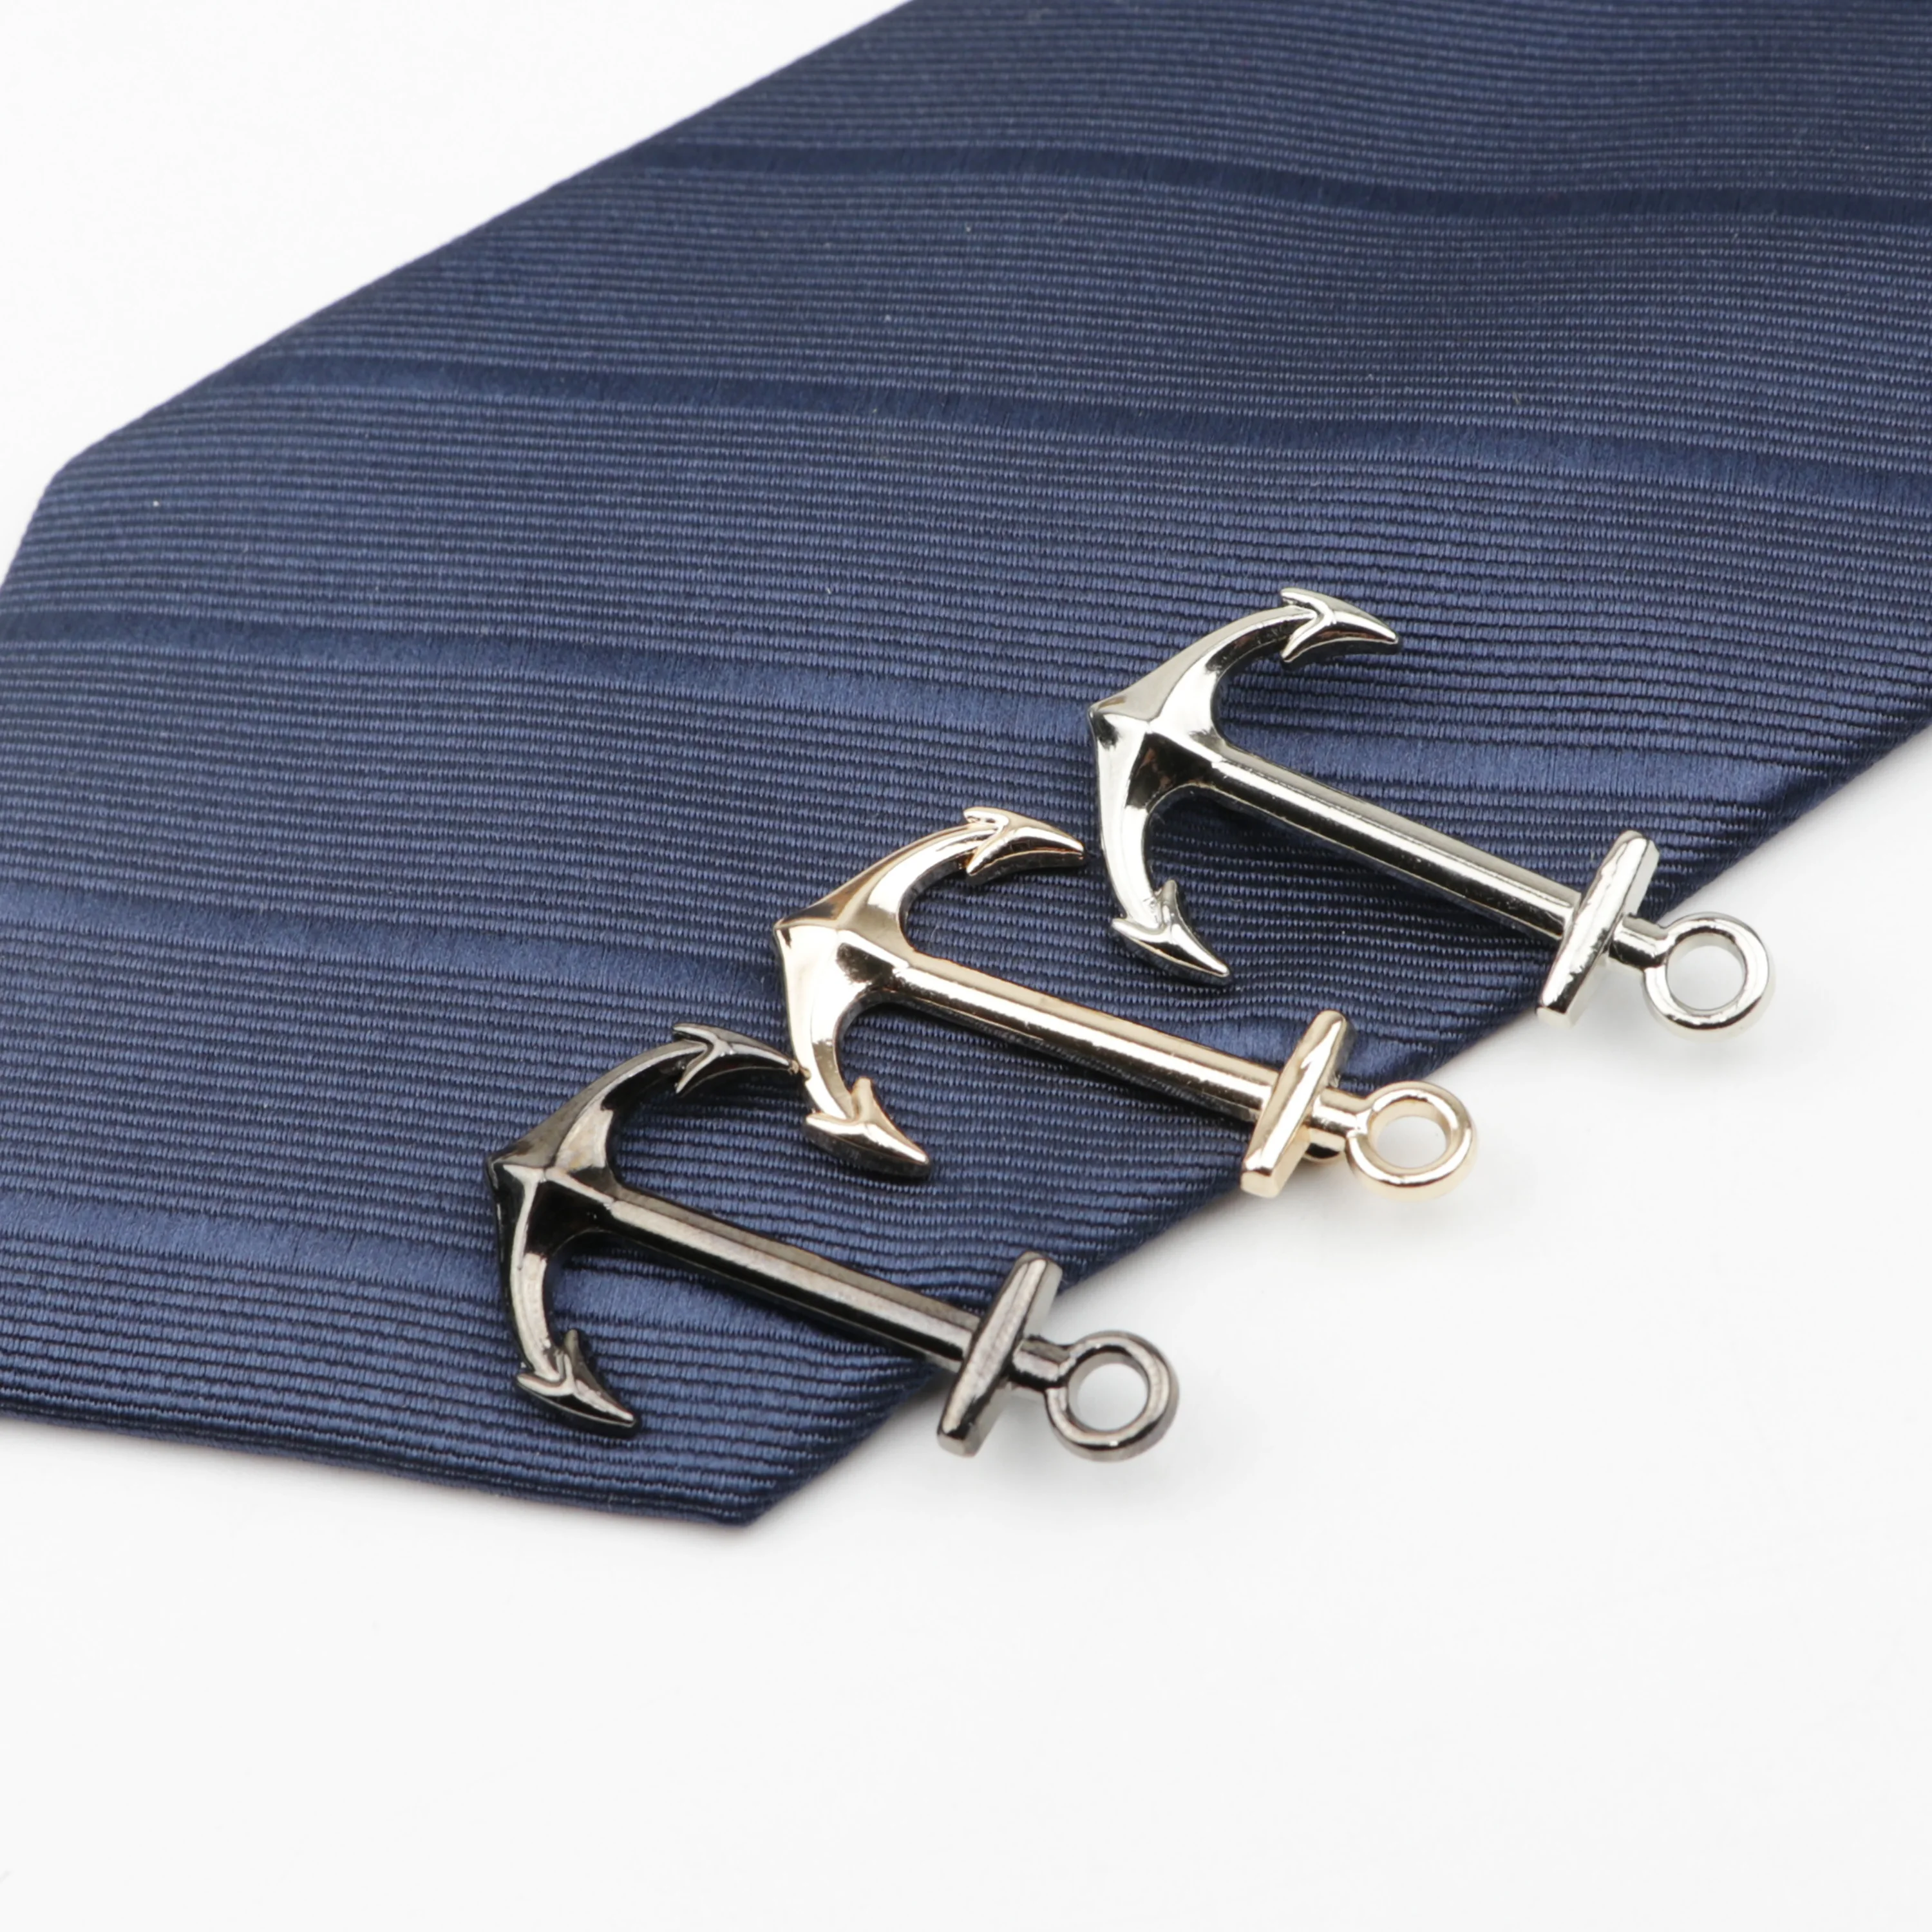 Men's Anchor Tie Clips 3 Colors Gold Black Option Novel Anchor Design Tie Pins Jewelry Gift Wholesale&Retail Arrow Clips